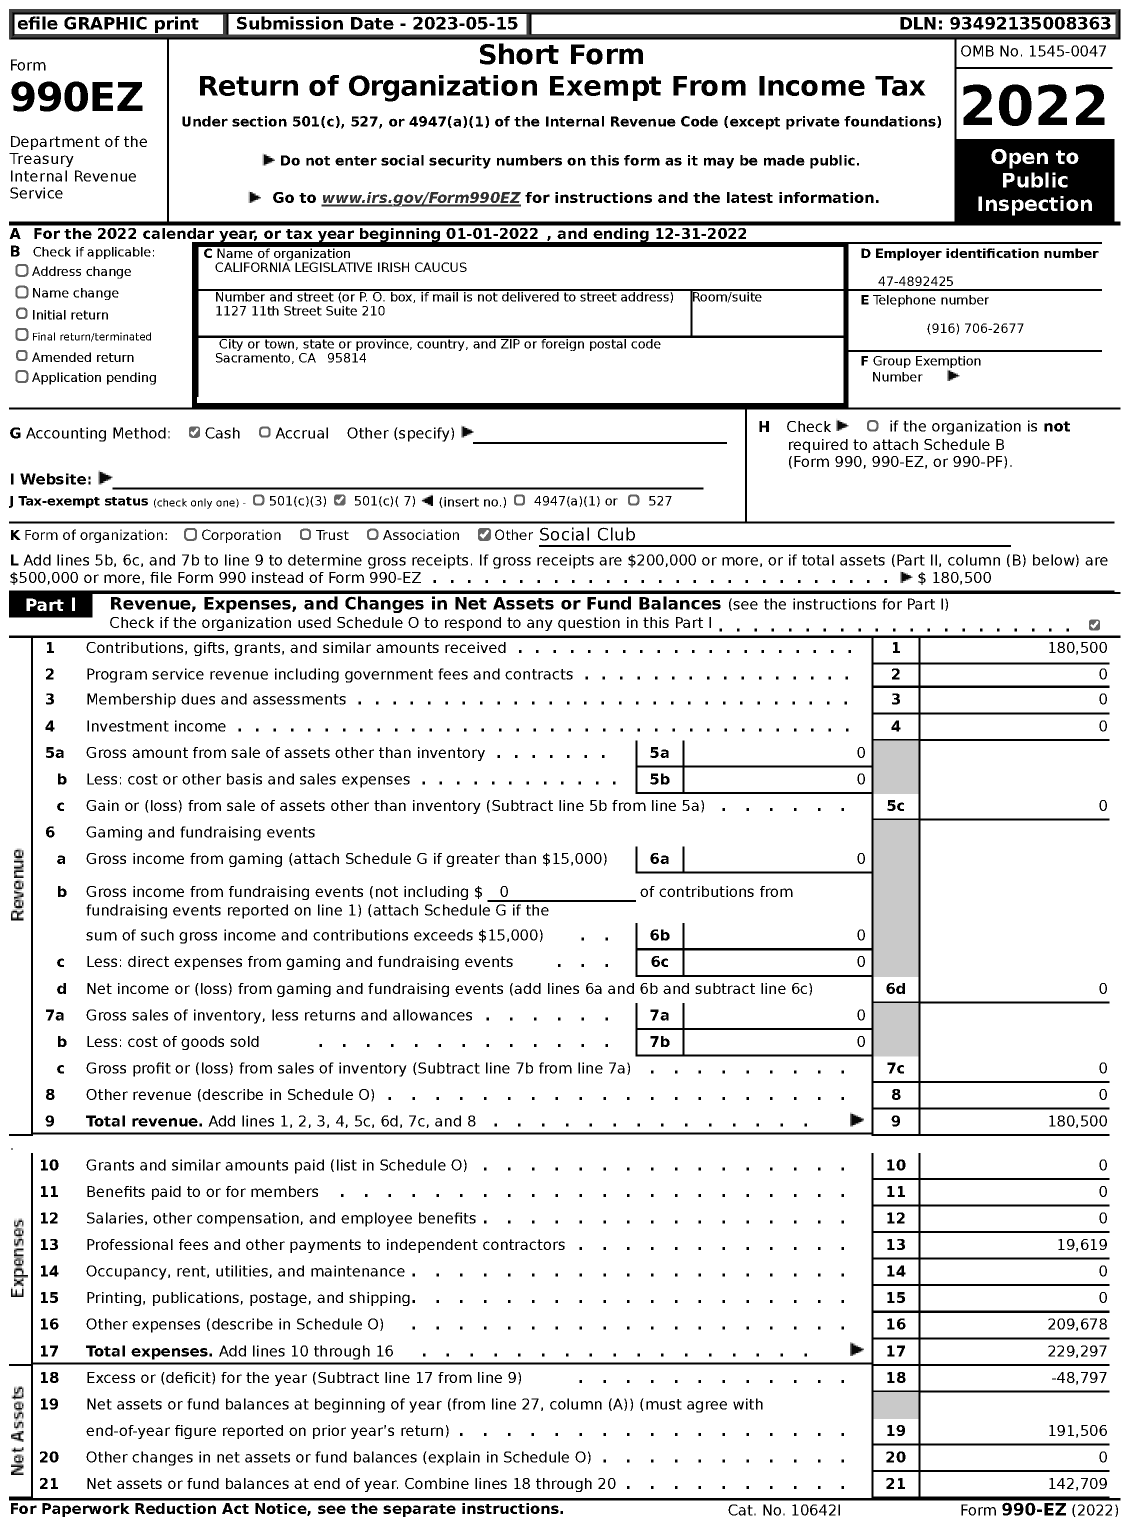 Image of first page of 2022 Form 990EZ for California Legislative Irish Caucus